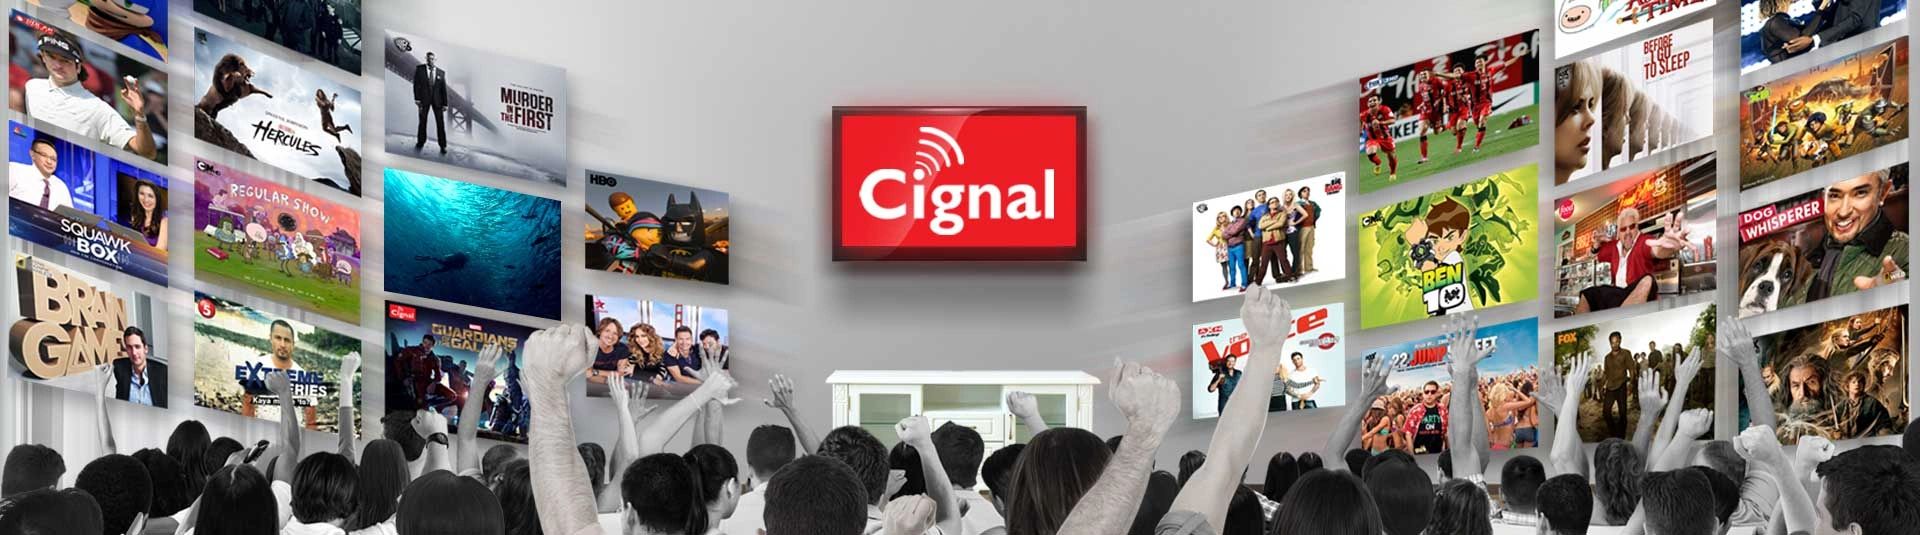 Cignal TV Apply Now